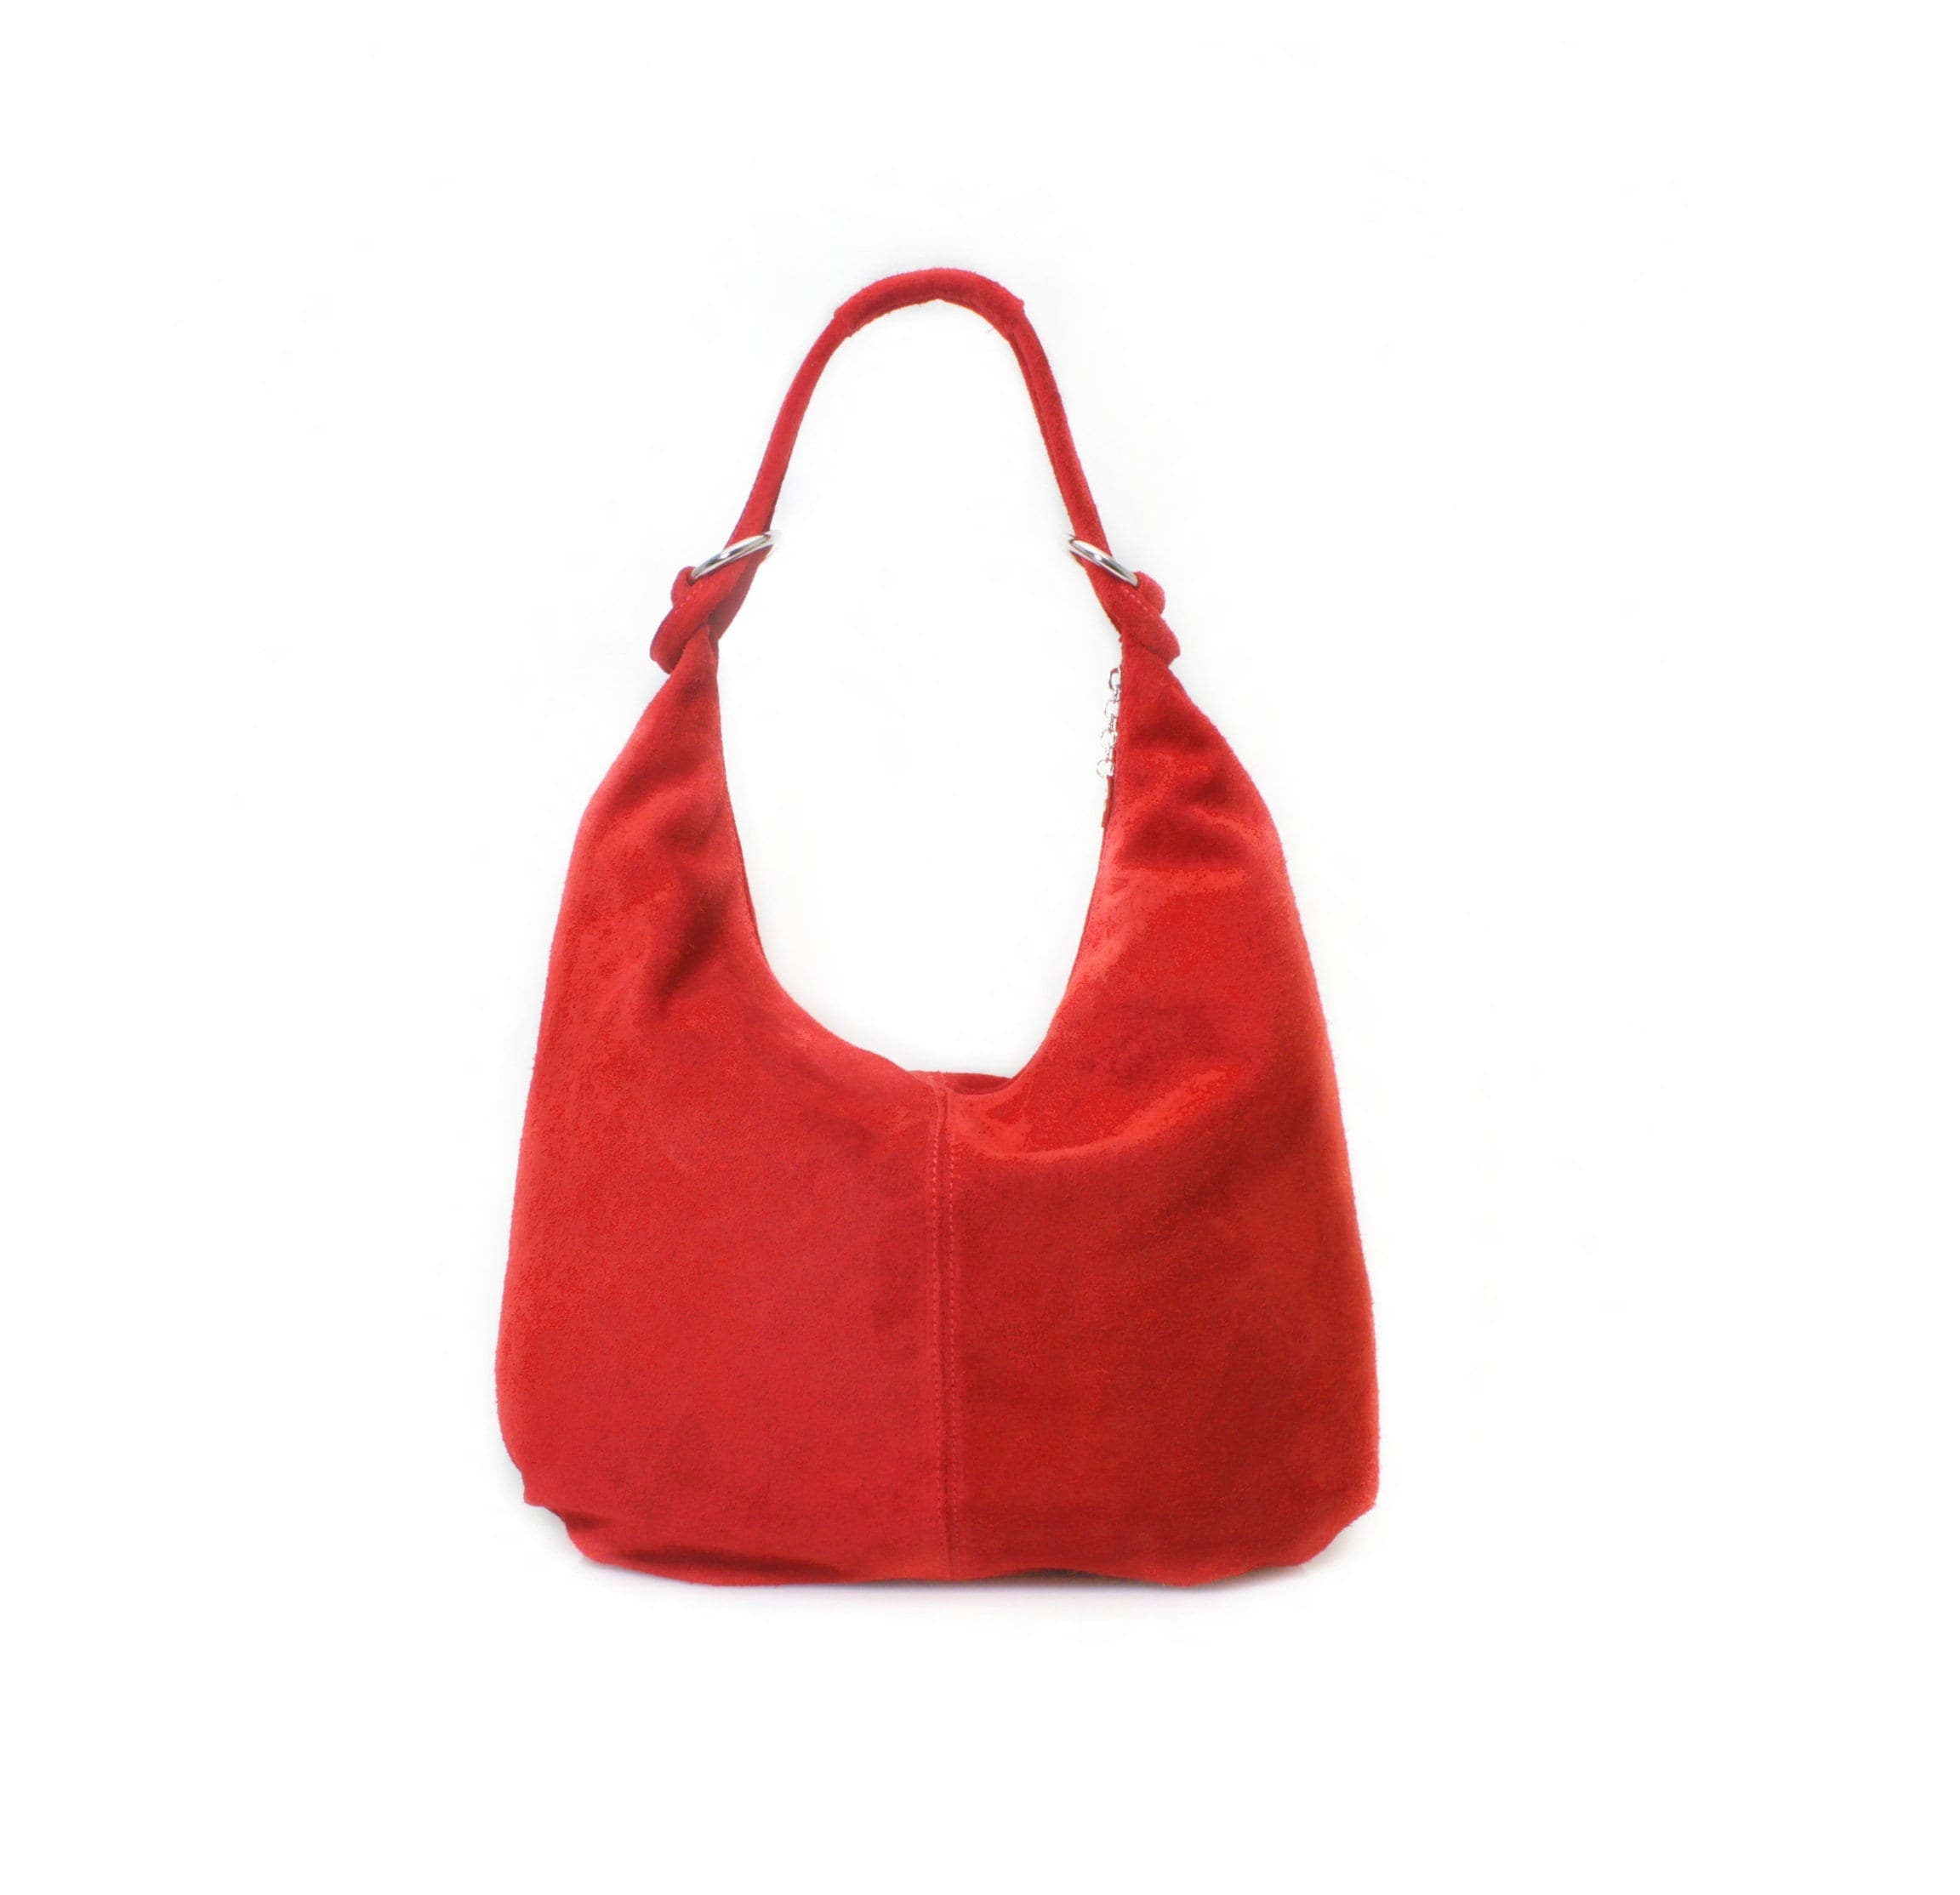 Mudono Women's Small Suede Tote Bag